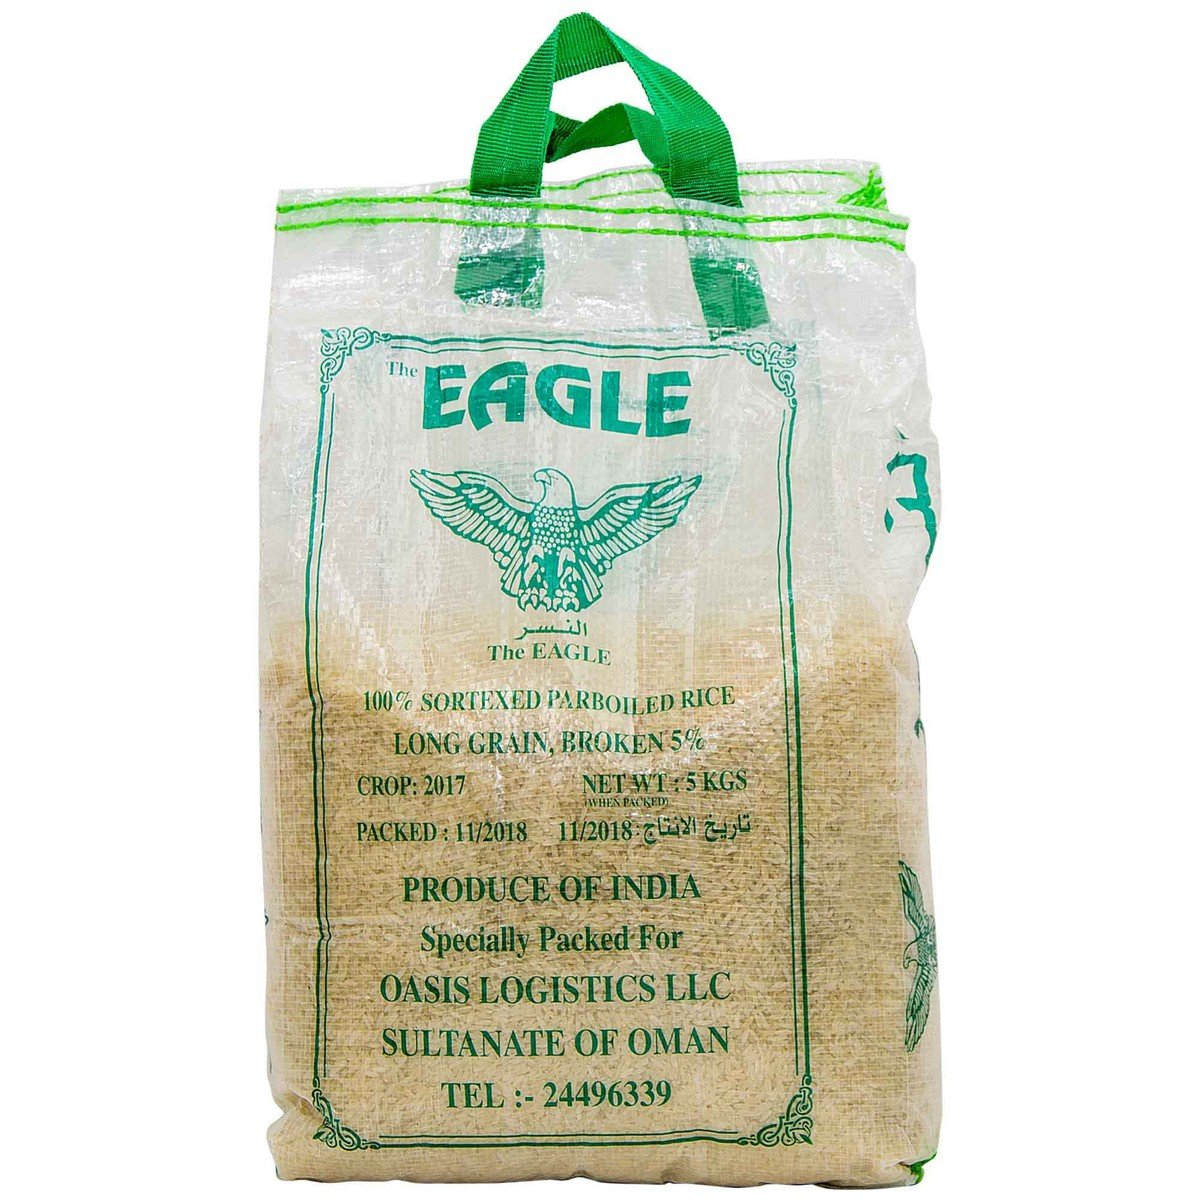 Eagle Indian 100 Sortexed Parboiled Long Grain Rice 5kg Online At Best